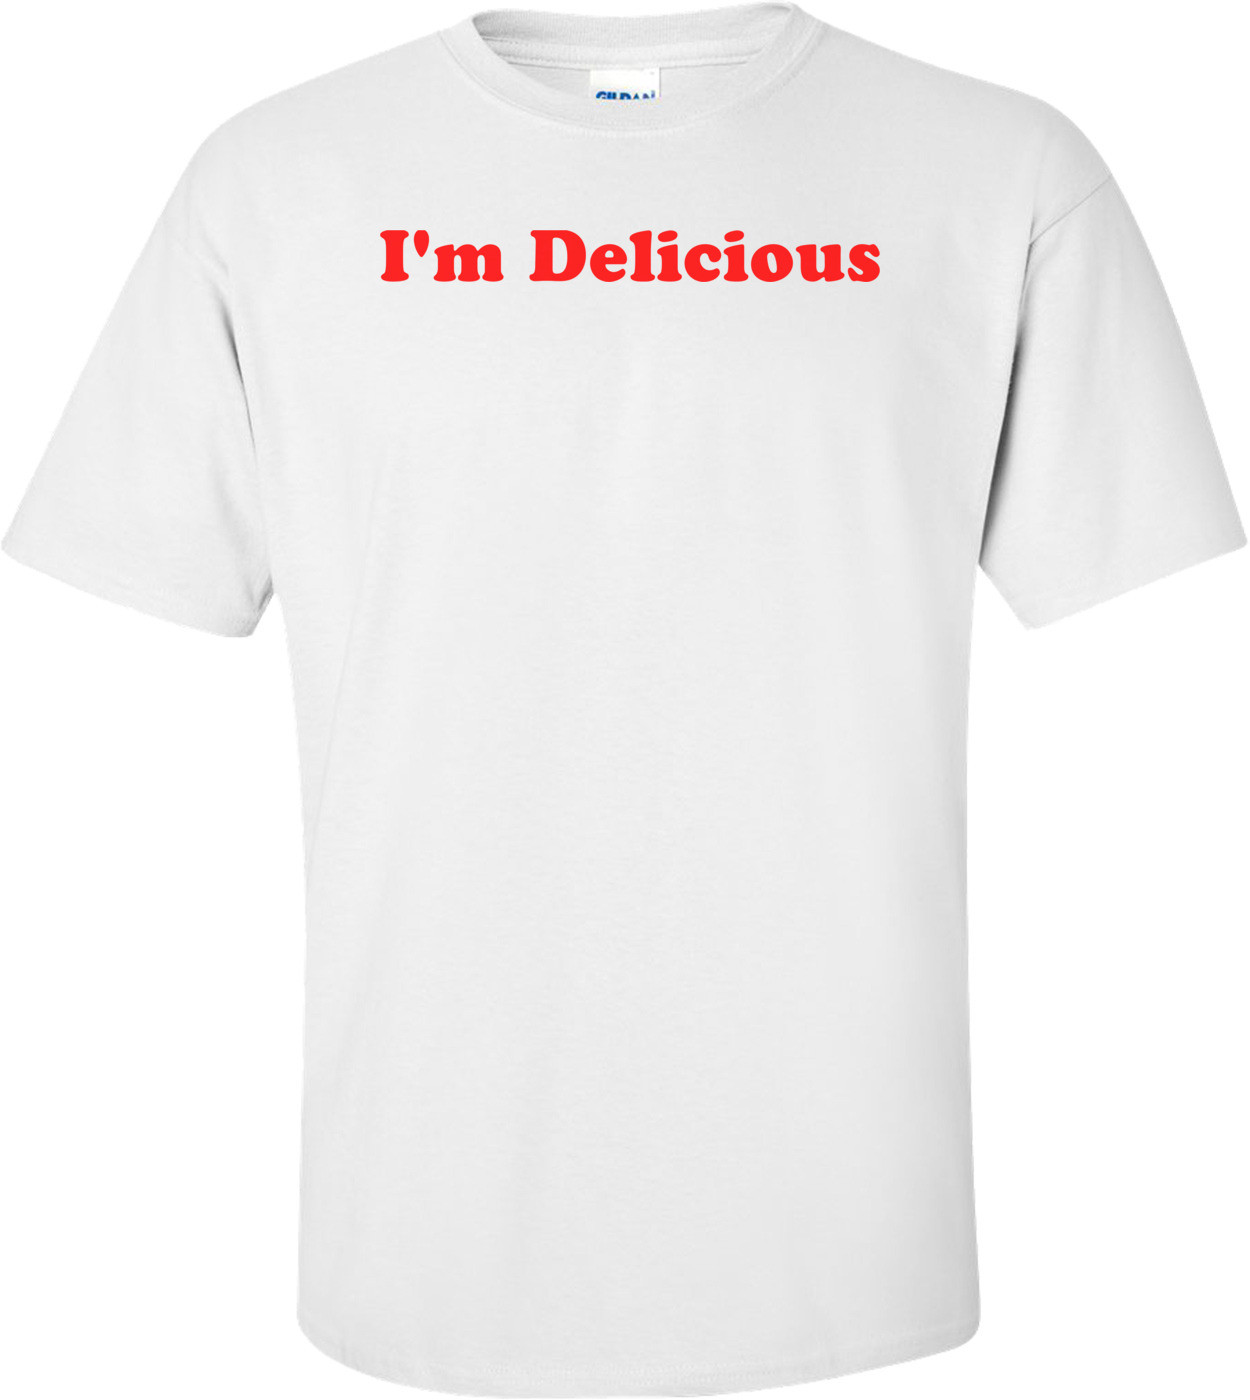 I'm Delicious T-Shirt